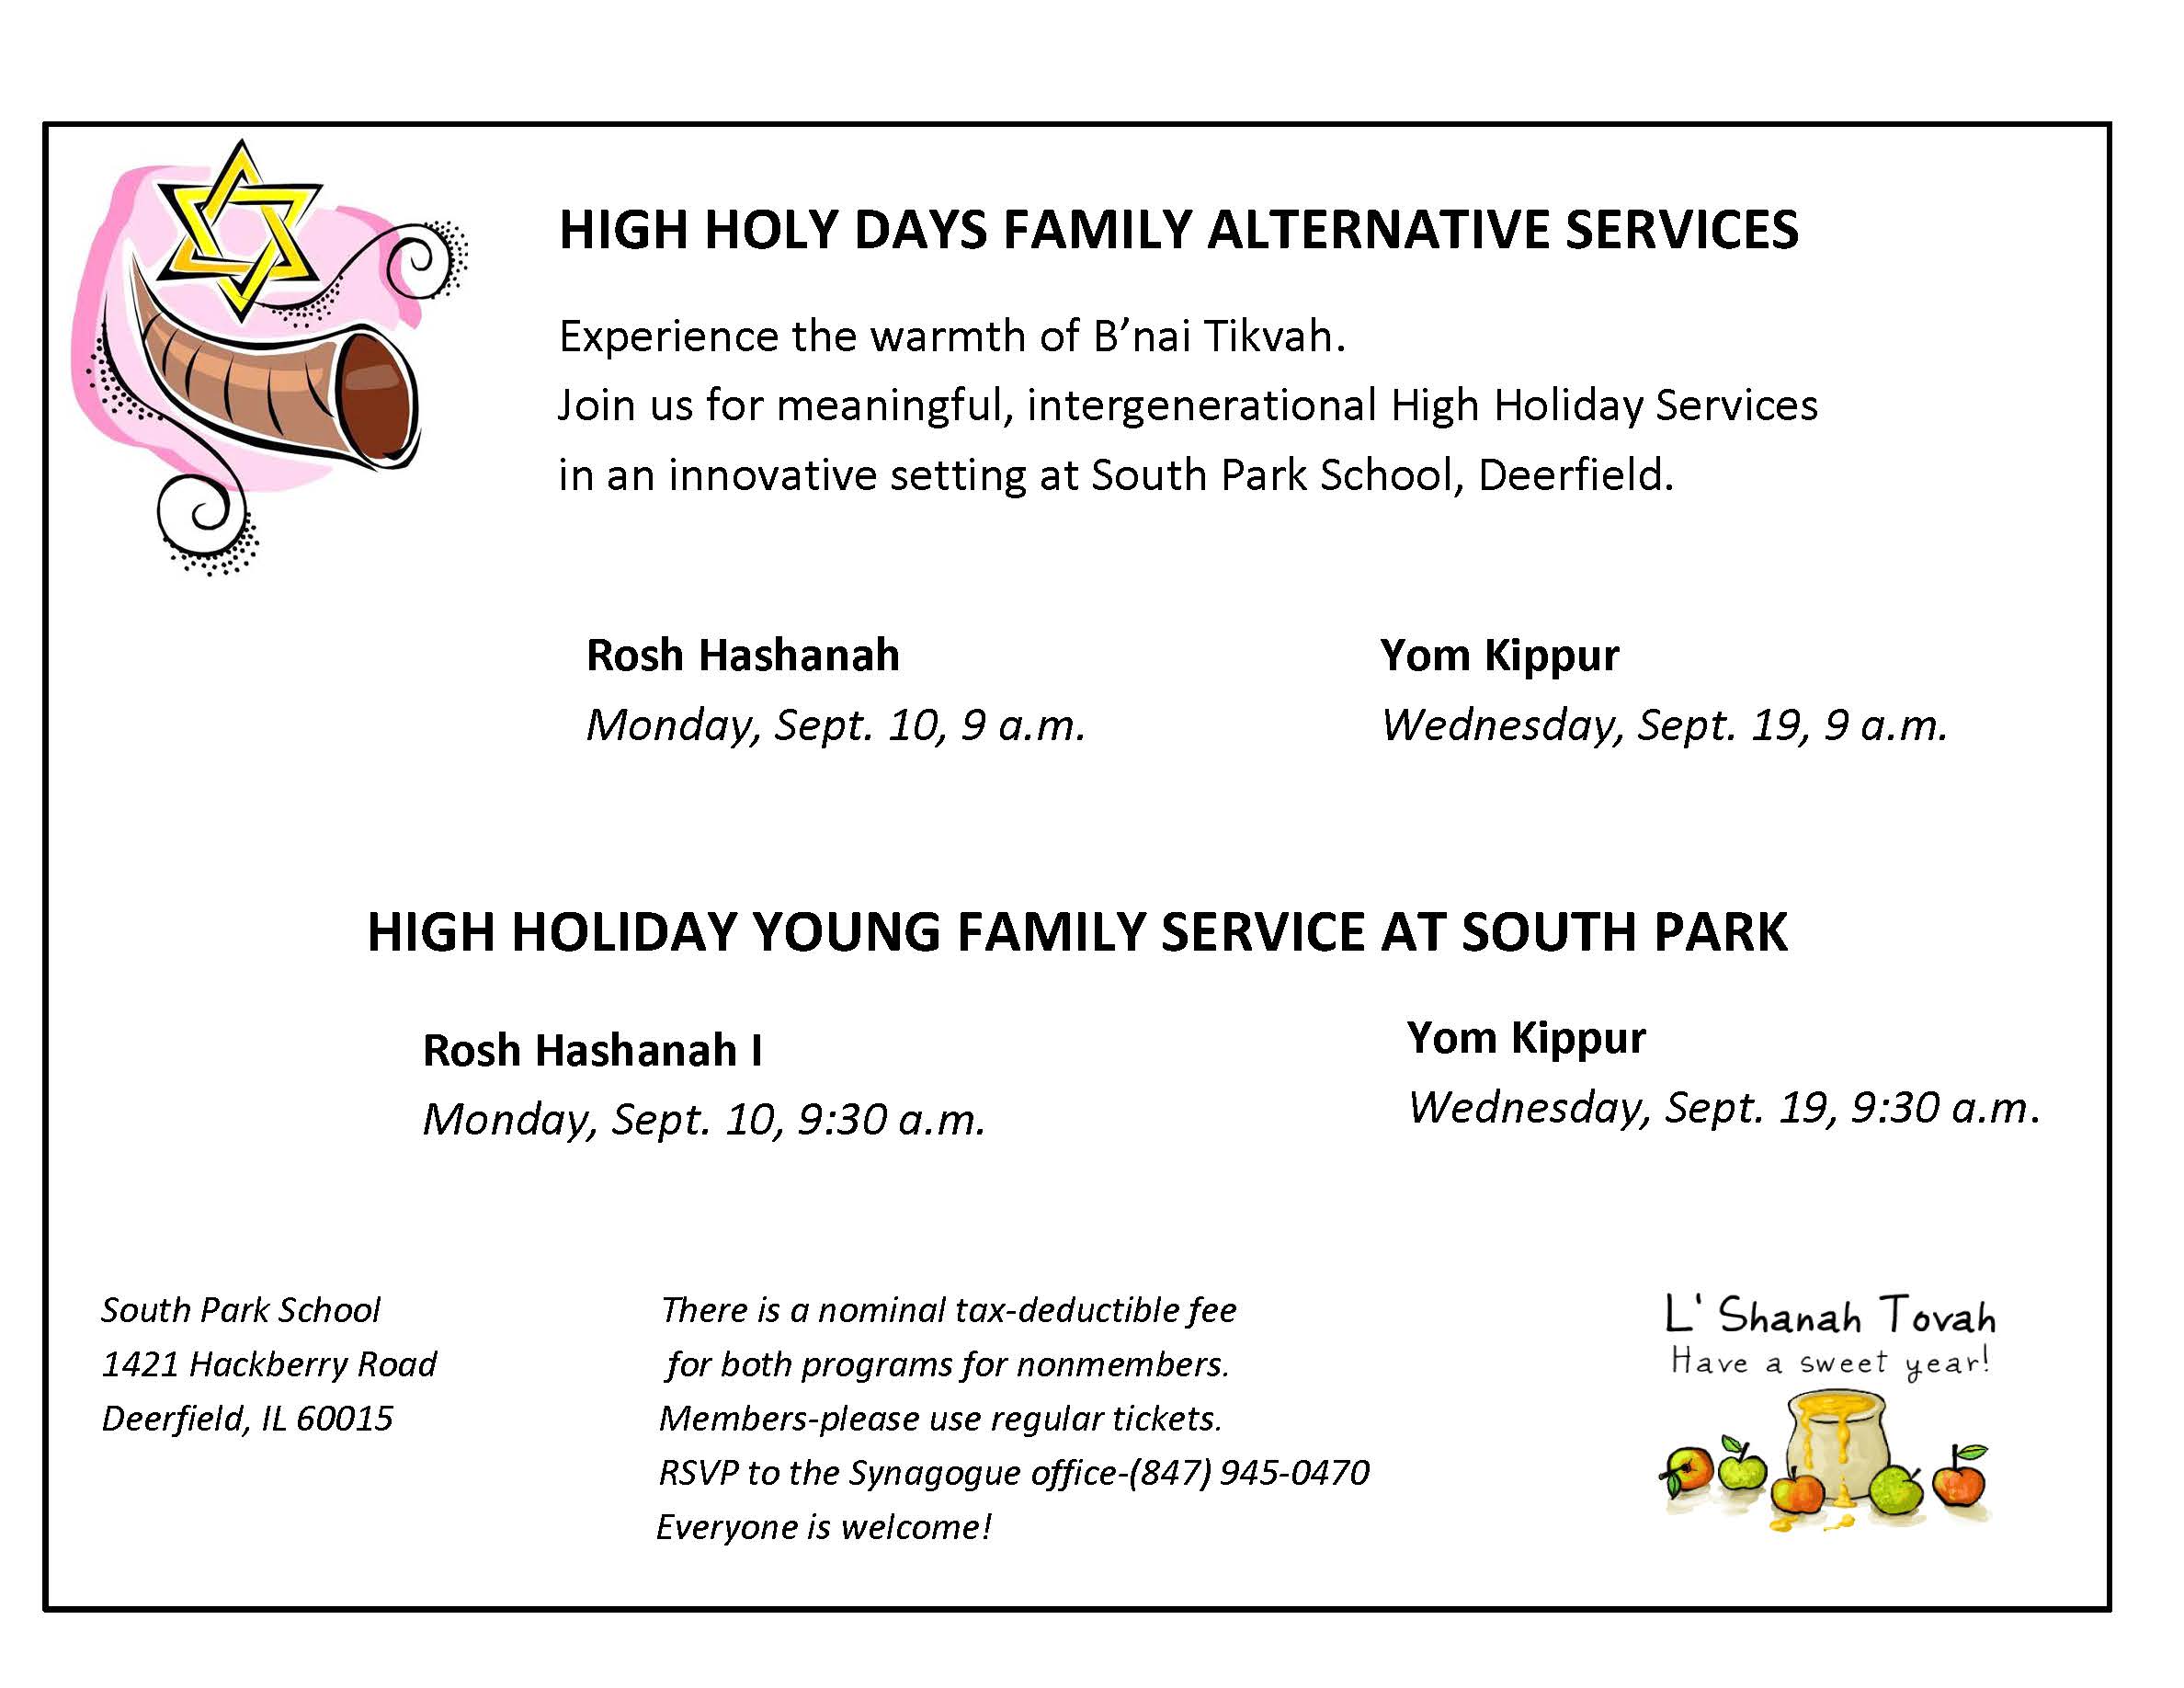 Alternative High Holiday Services